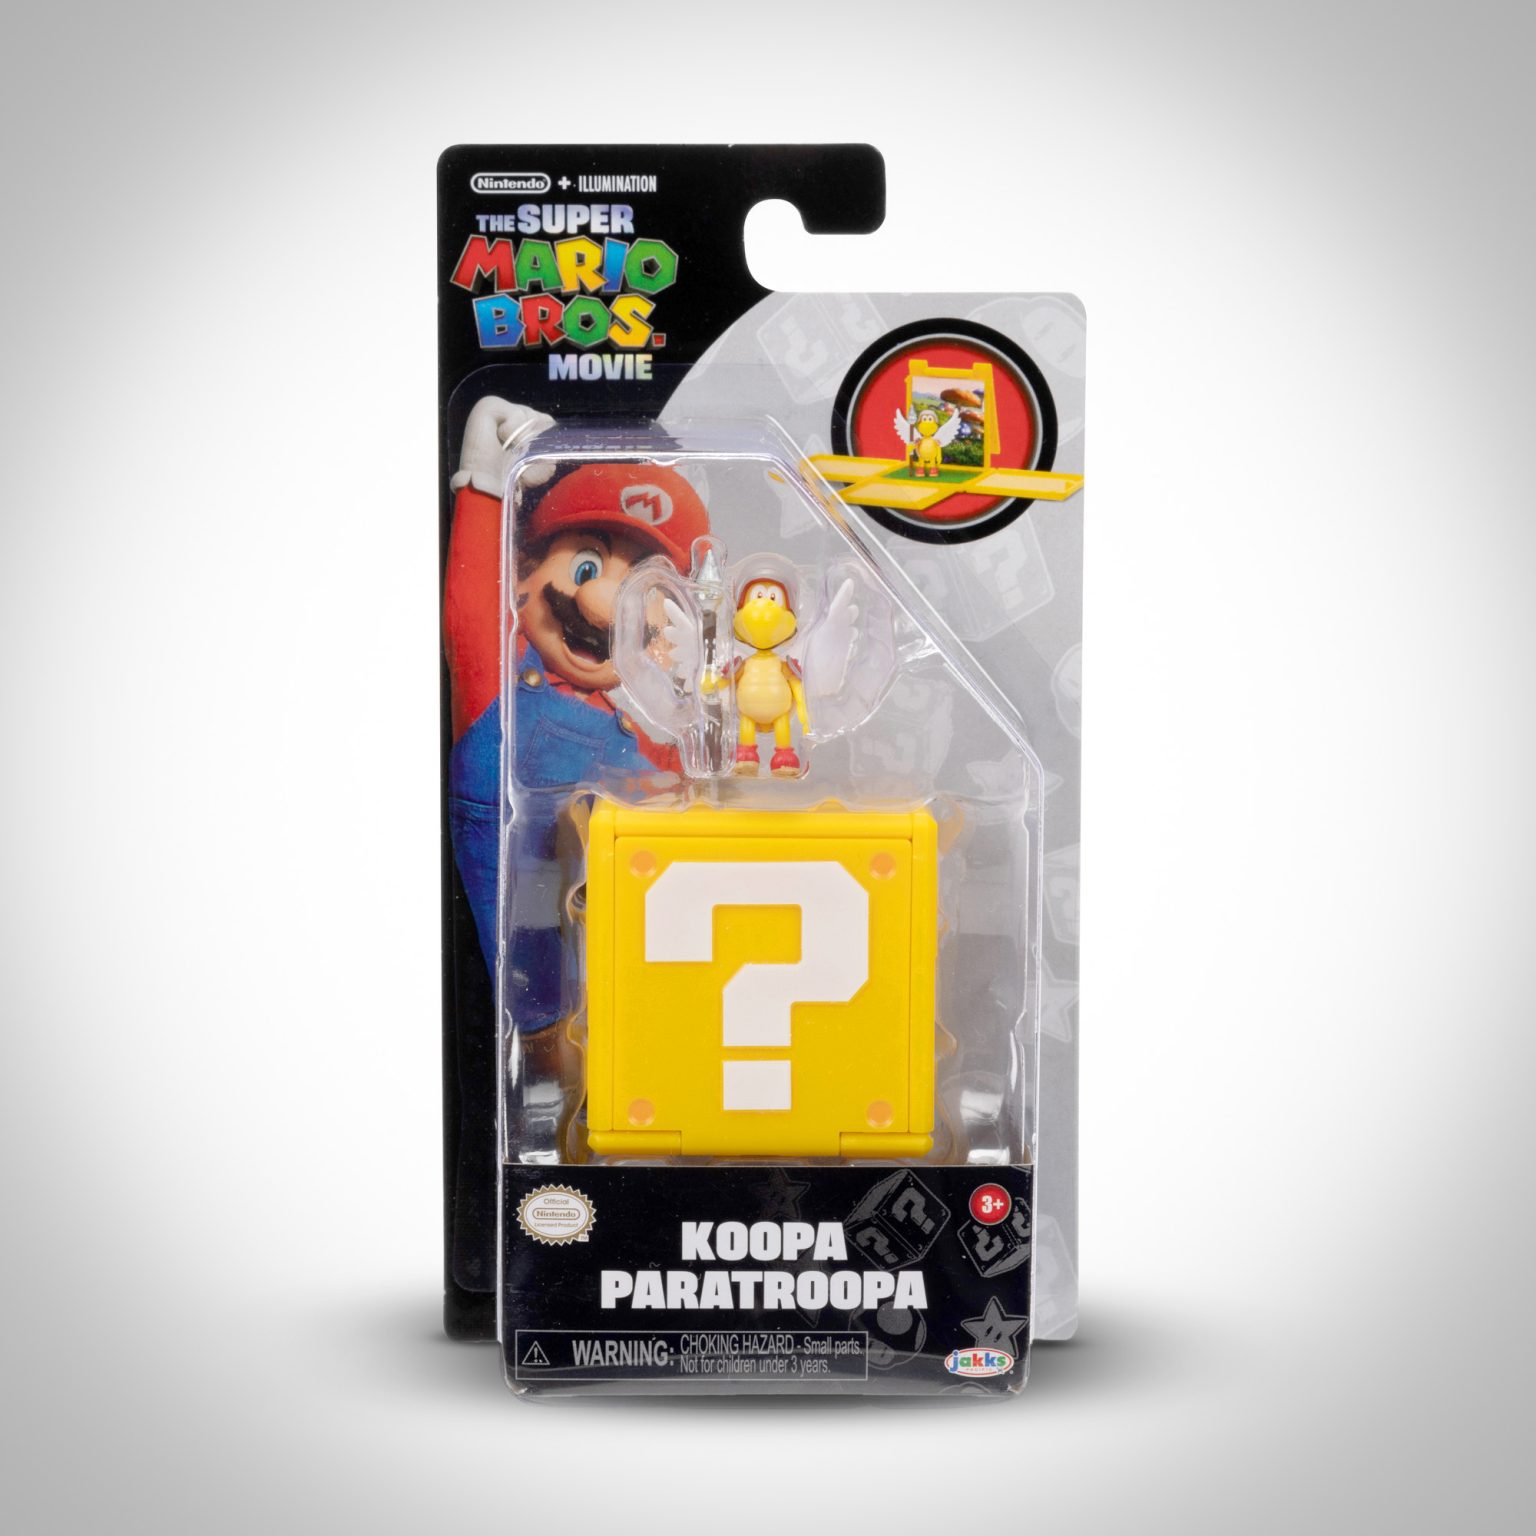 The Super Mario Bros. Movie 1.25” Mini Figure with Question Block Koopa Paratroopa